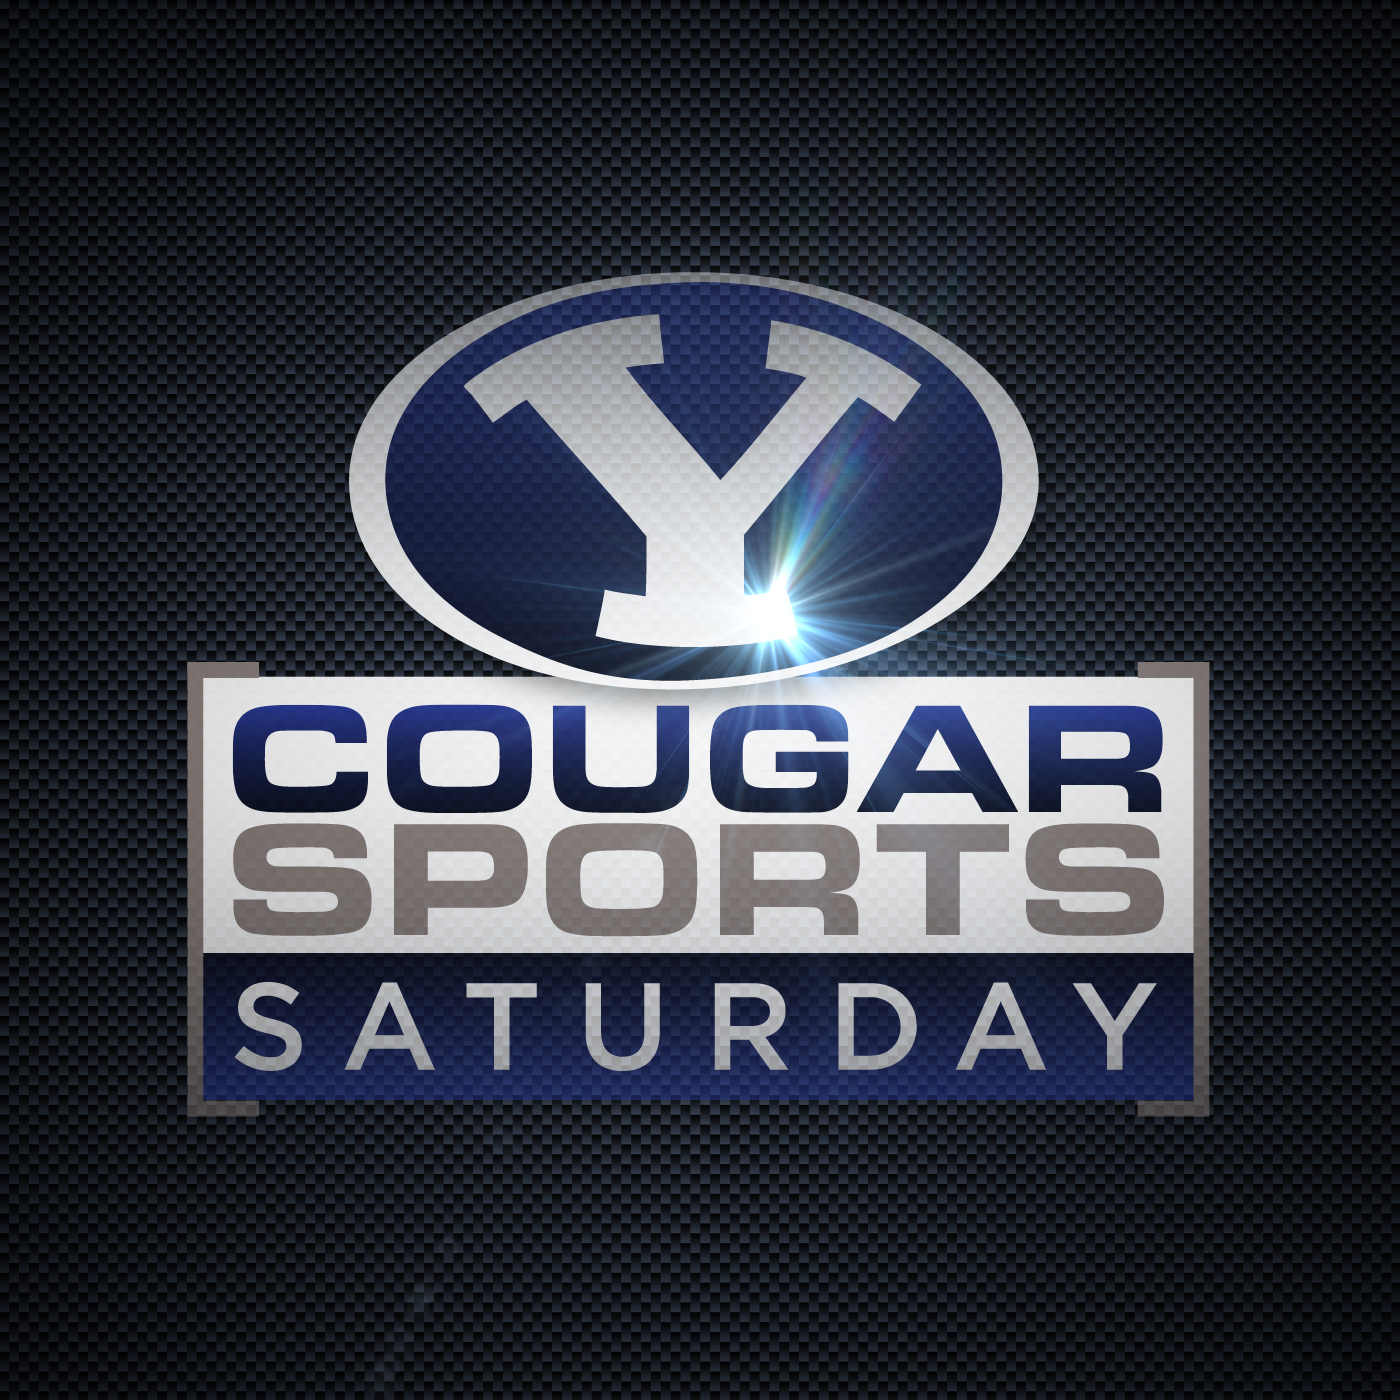 Cougar Sports Saturday